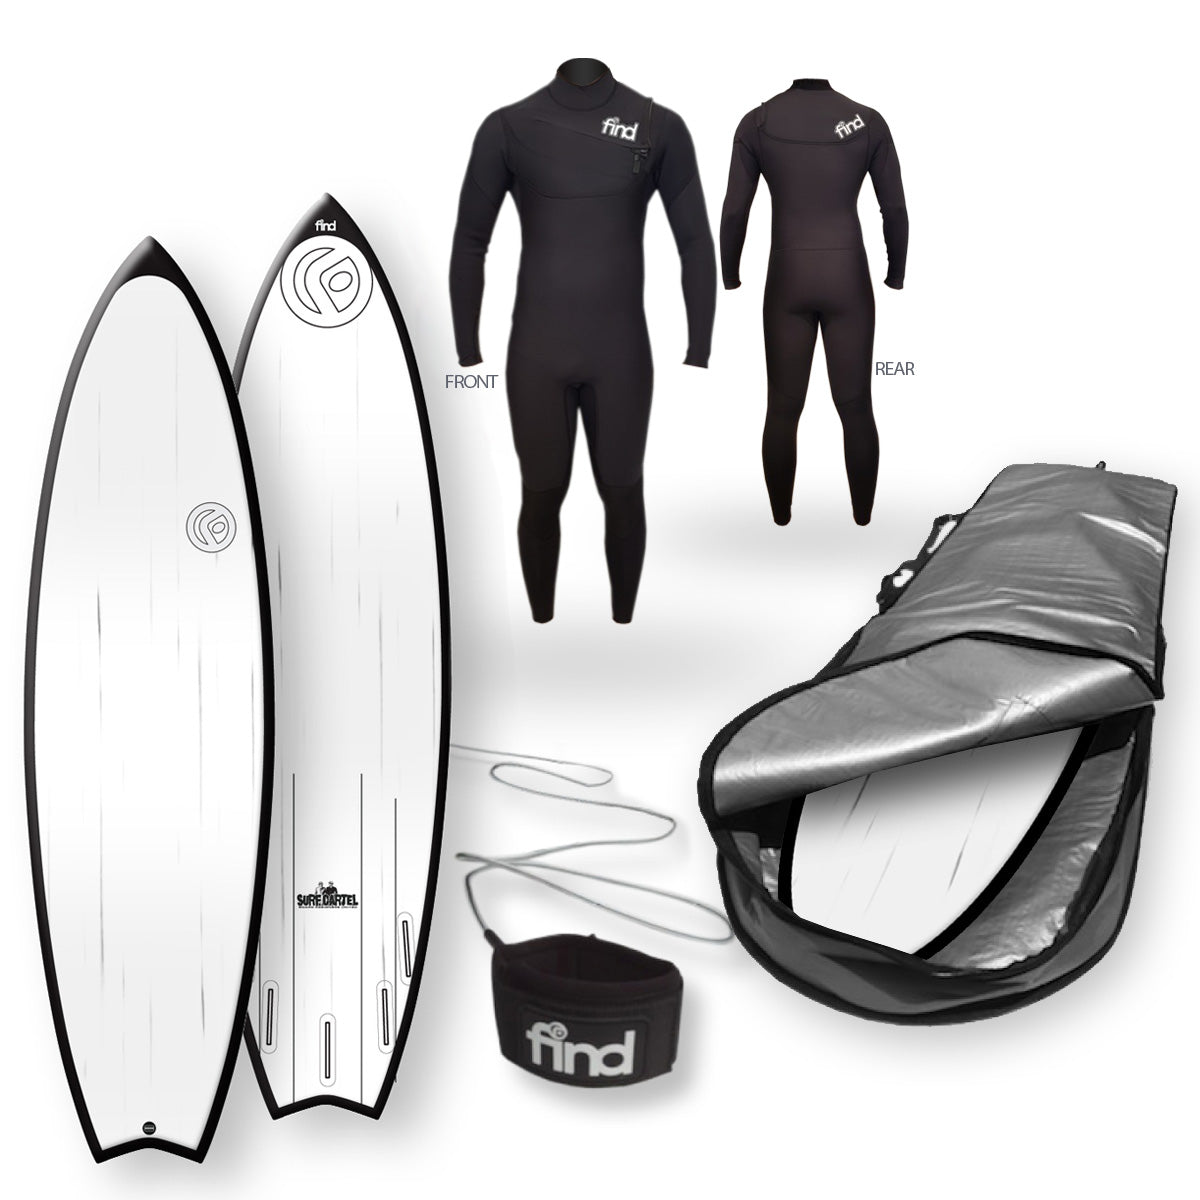 Find™ Speedsta 60 Polytec Black Streaked Surfboard Cover Leash Wetsuit Package - Default Title